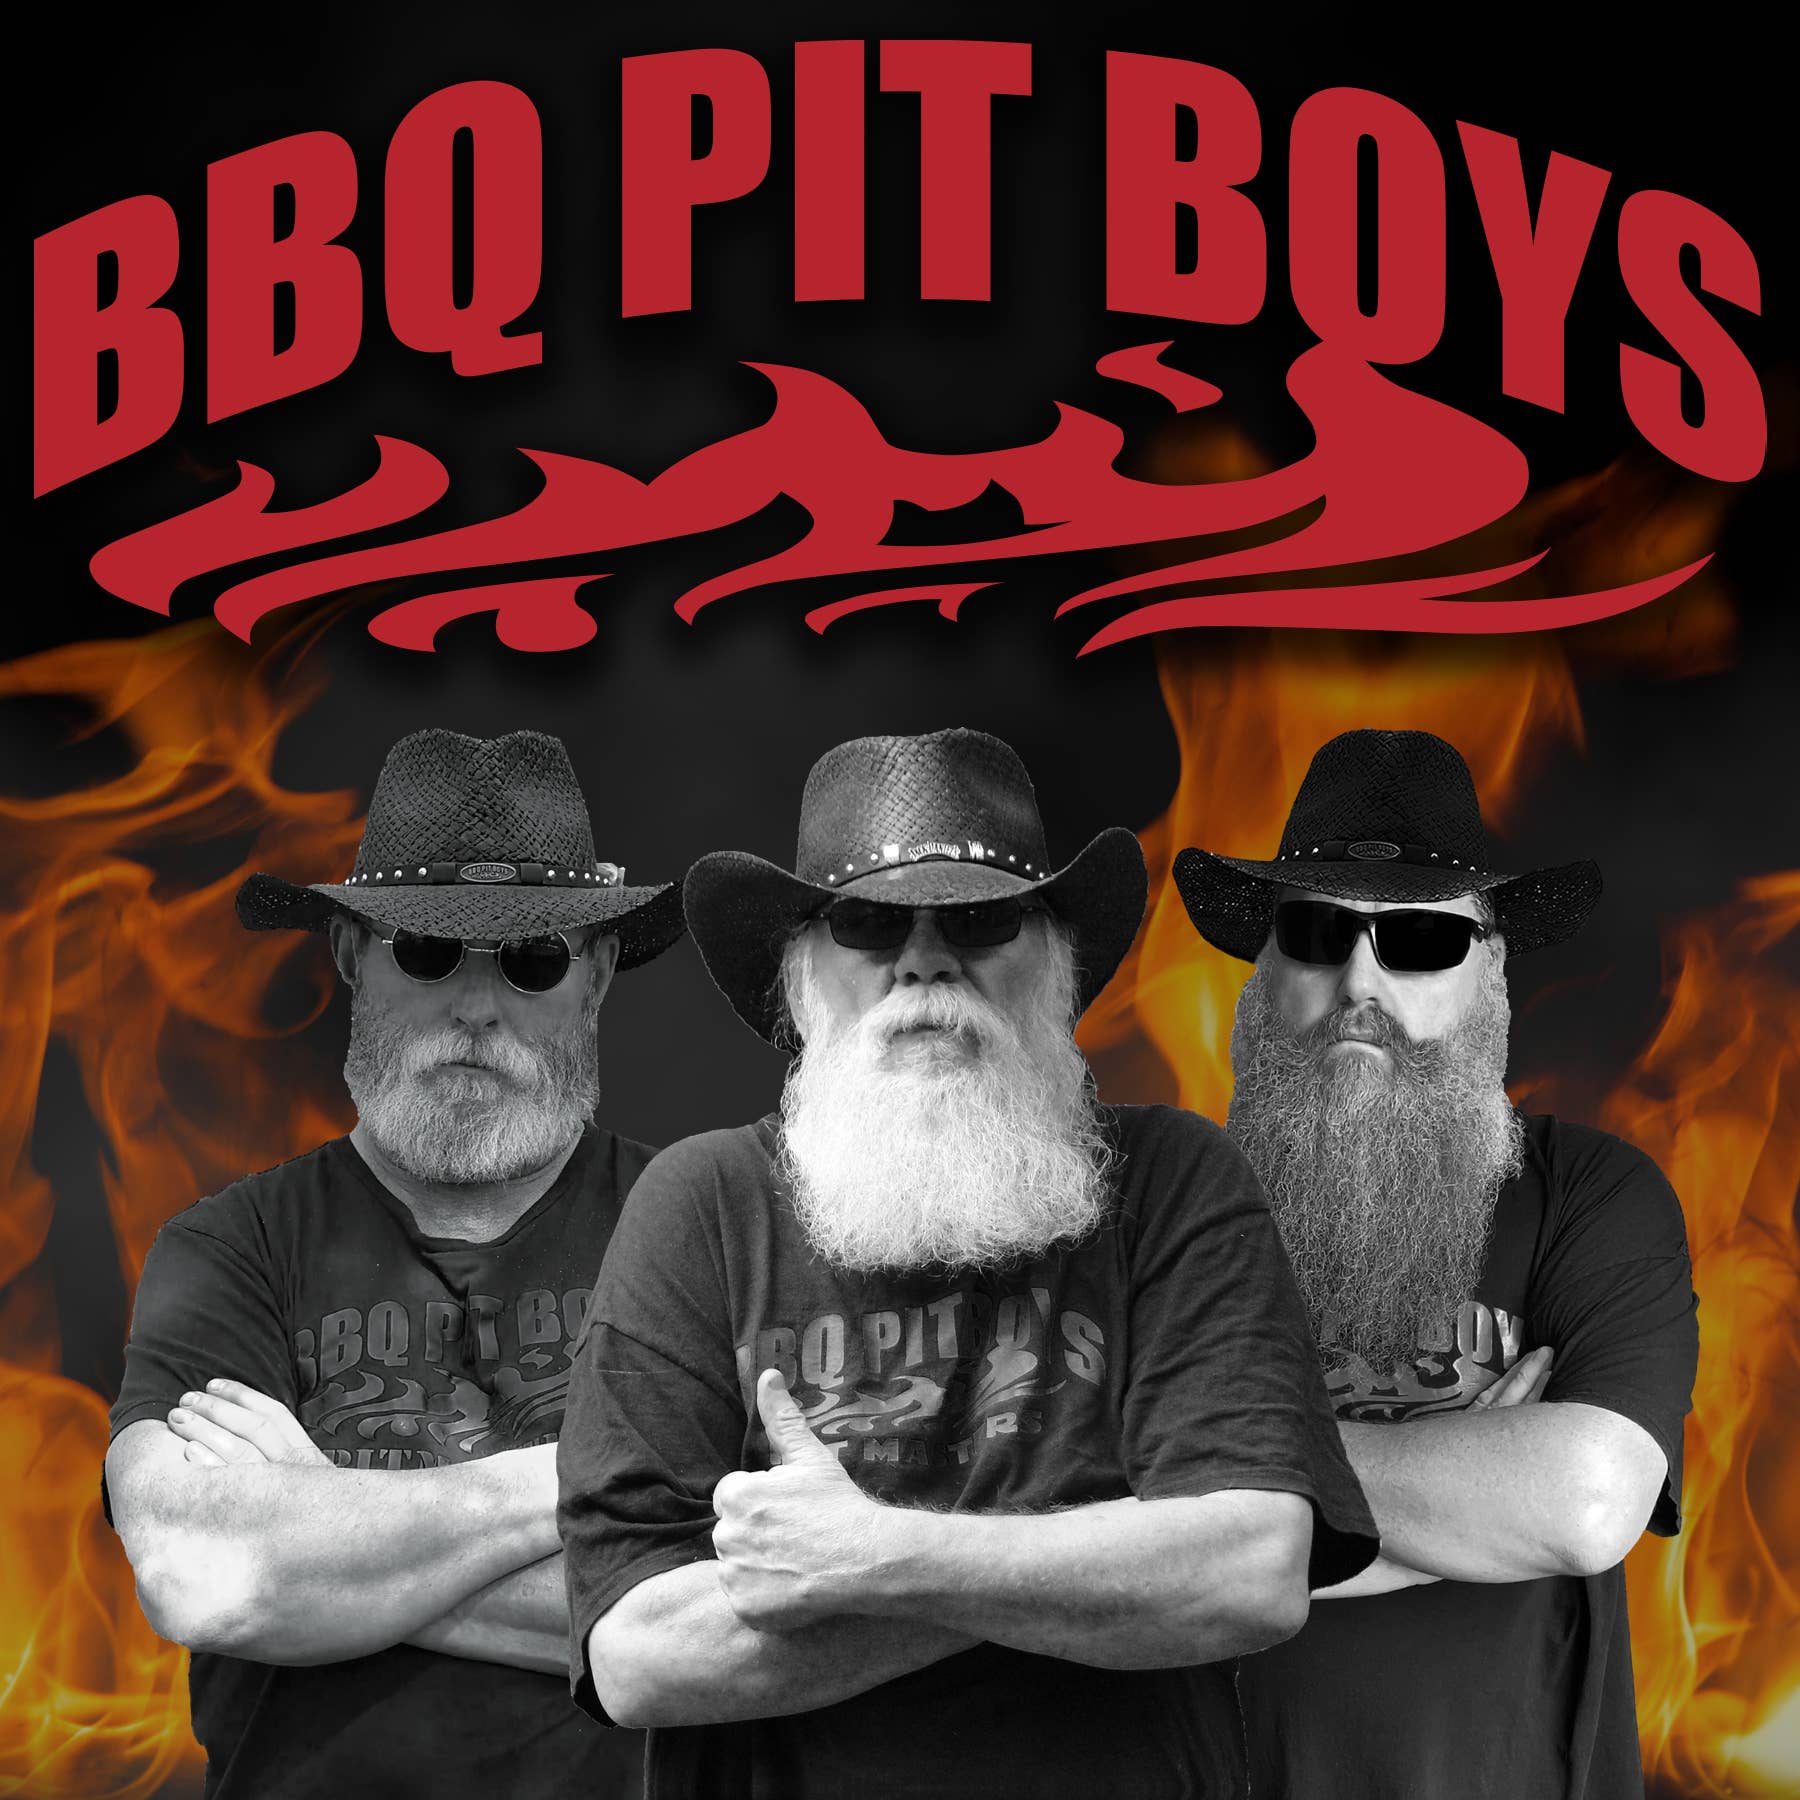 BBQ Pit Boys S.P.G. Seasoning